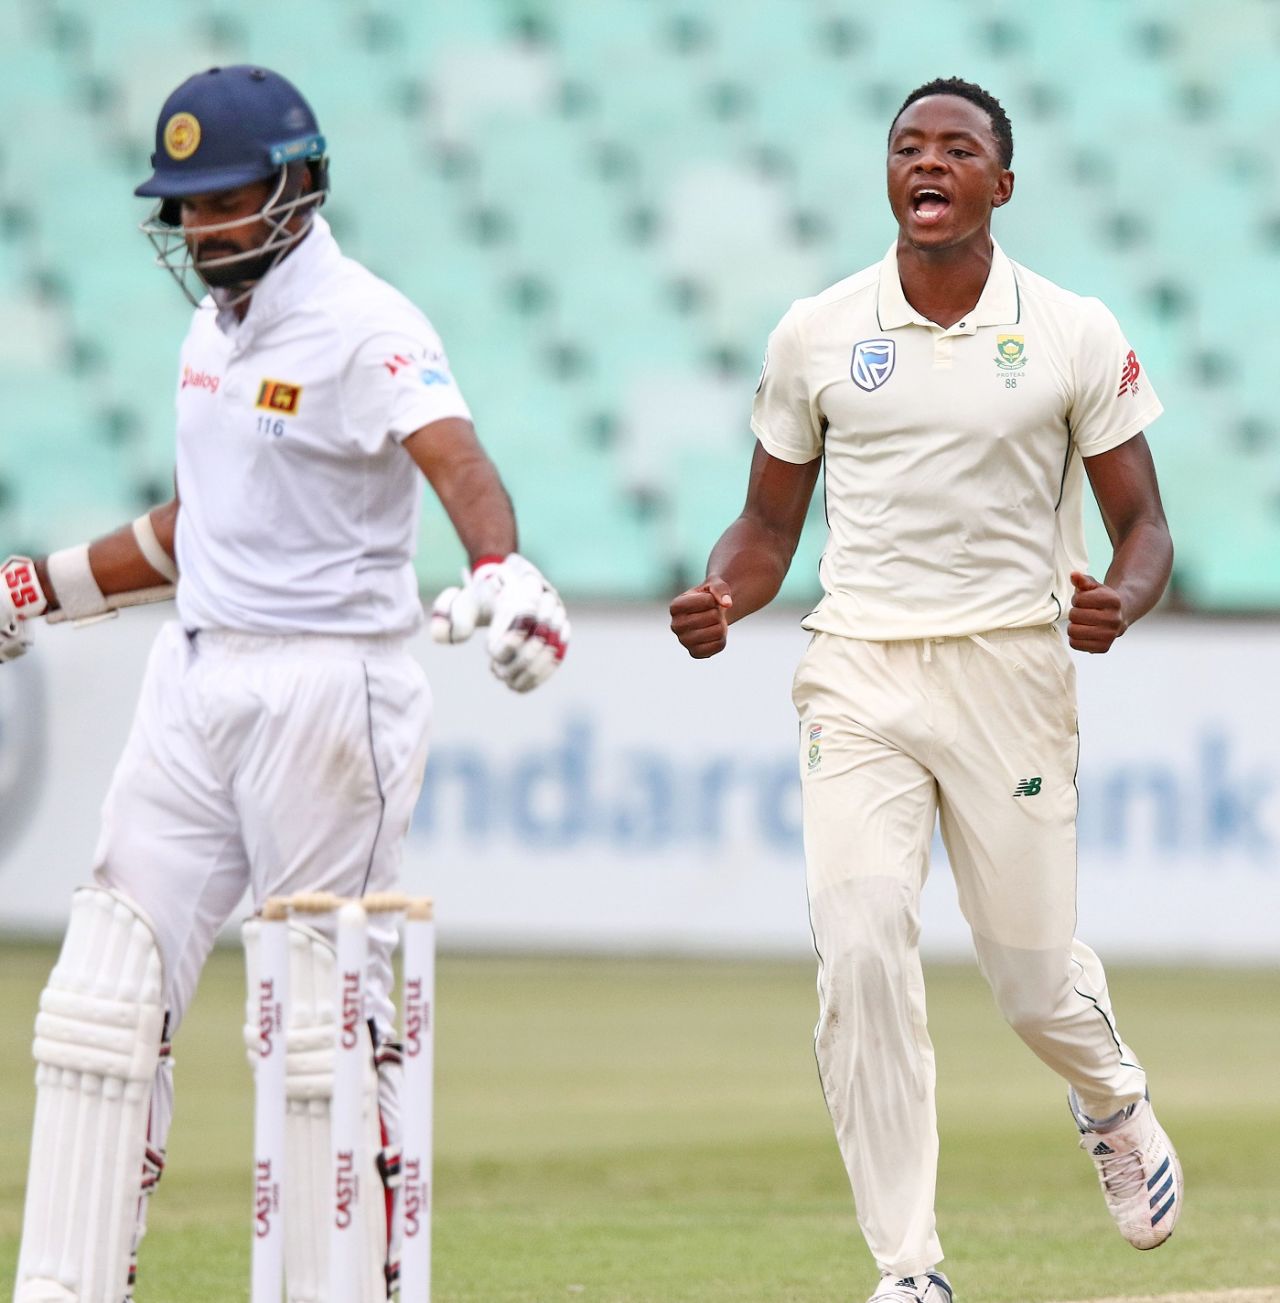 Kagiso Rabada sends Lahiru Thirimanne back, South Africa v Sri Lanka, 1st Test, Durban, 3rd day, February 15, 2019